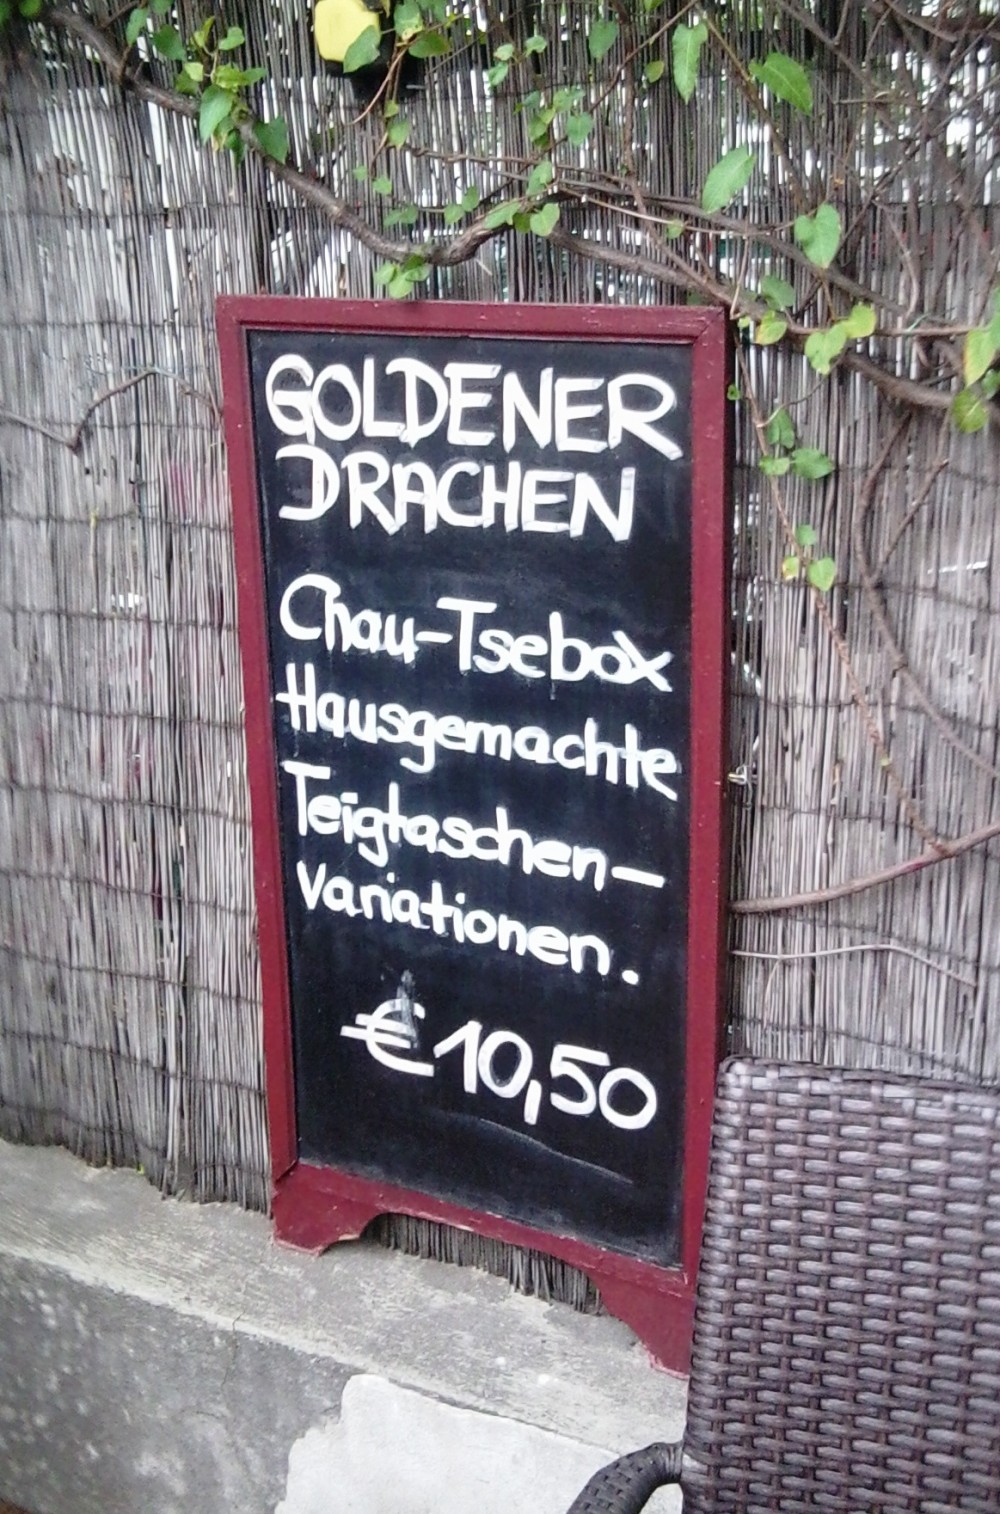 Goldener Drachen Aktionstafel - Goldener Drachen - Wien